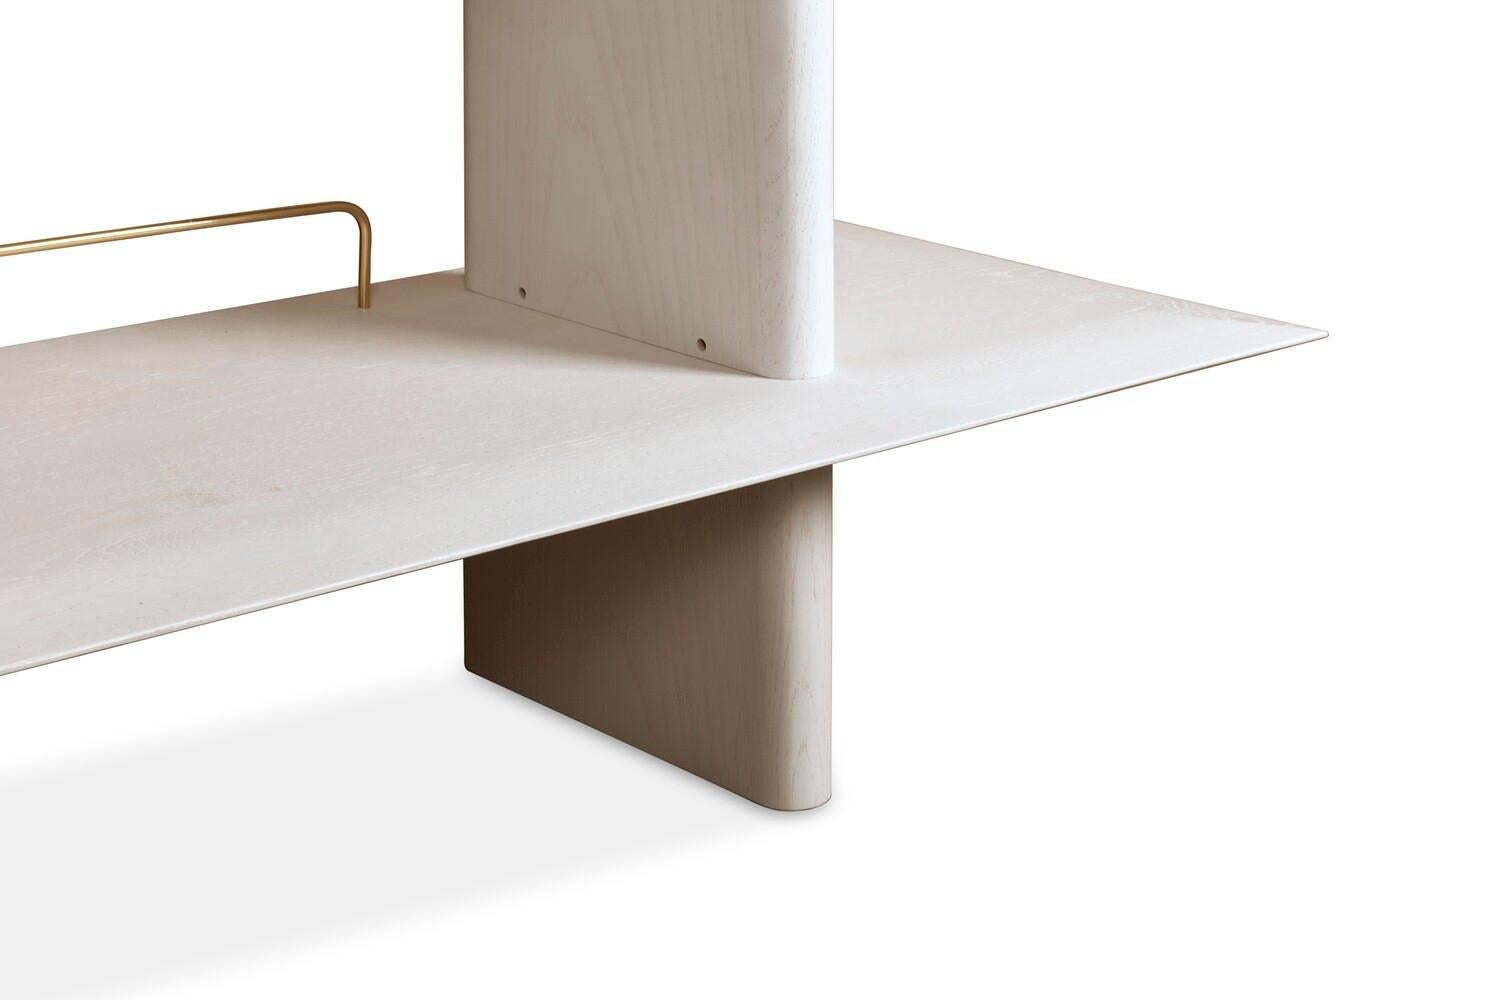 ‘Grafton’ Contemporary Modular Bookcase In New Condition For Sale In Loxwood, GB